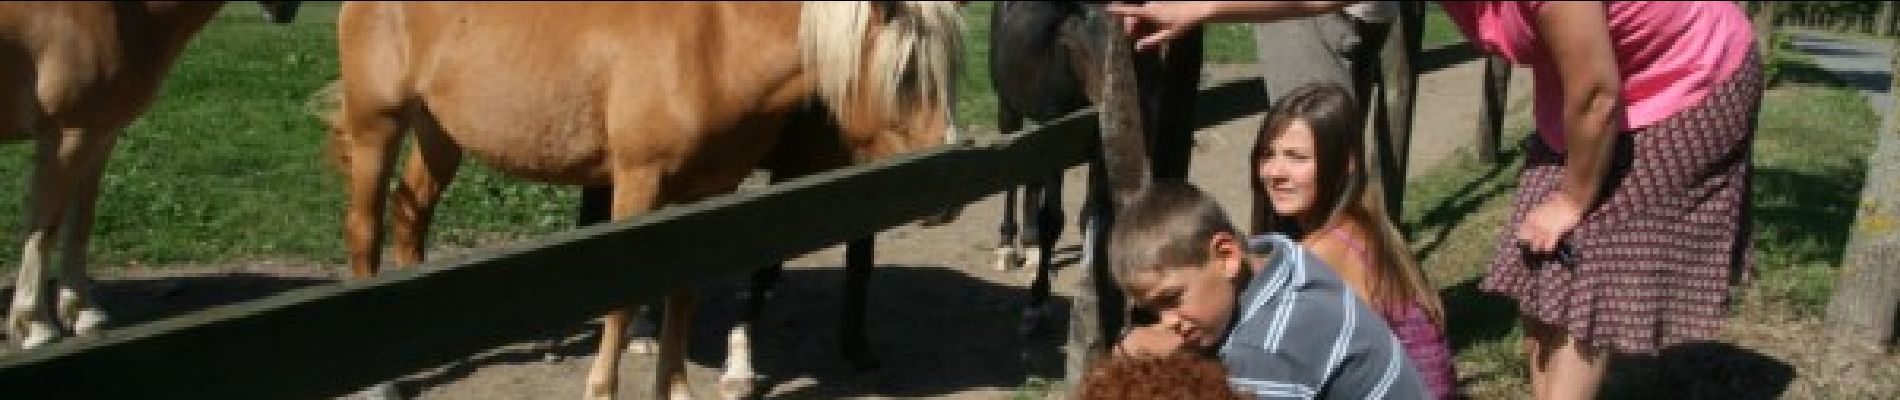 Punto de interés Beauraing - Our tip : the Comogne horse milk farm - Photo